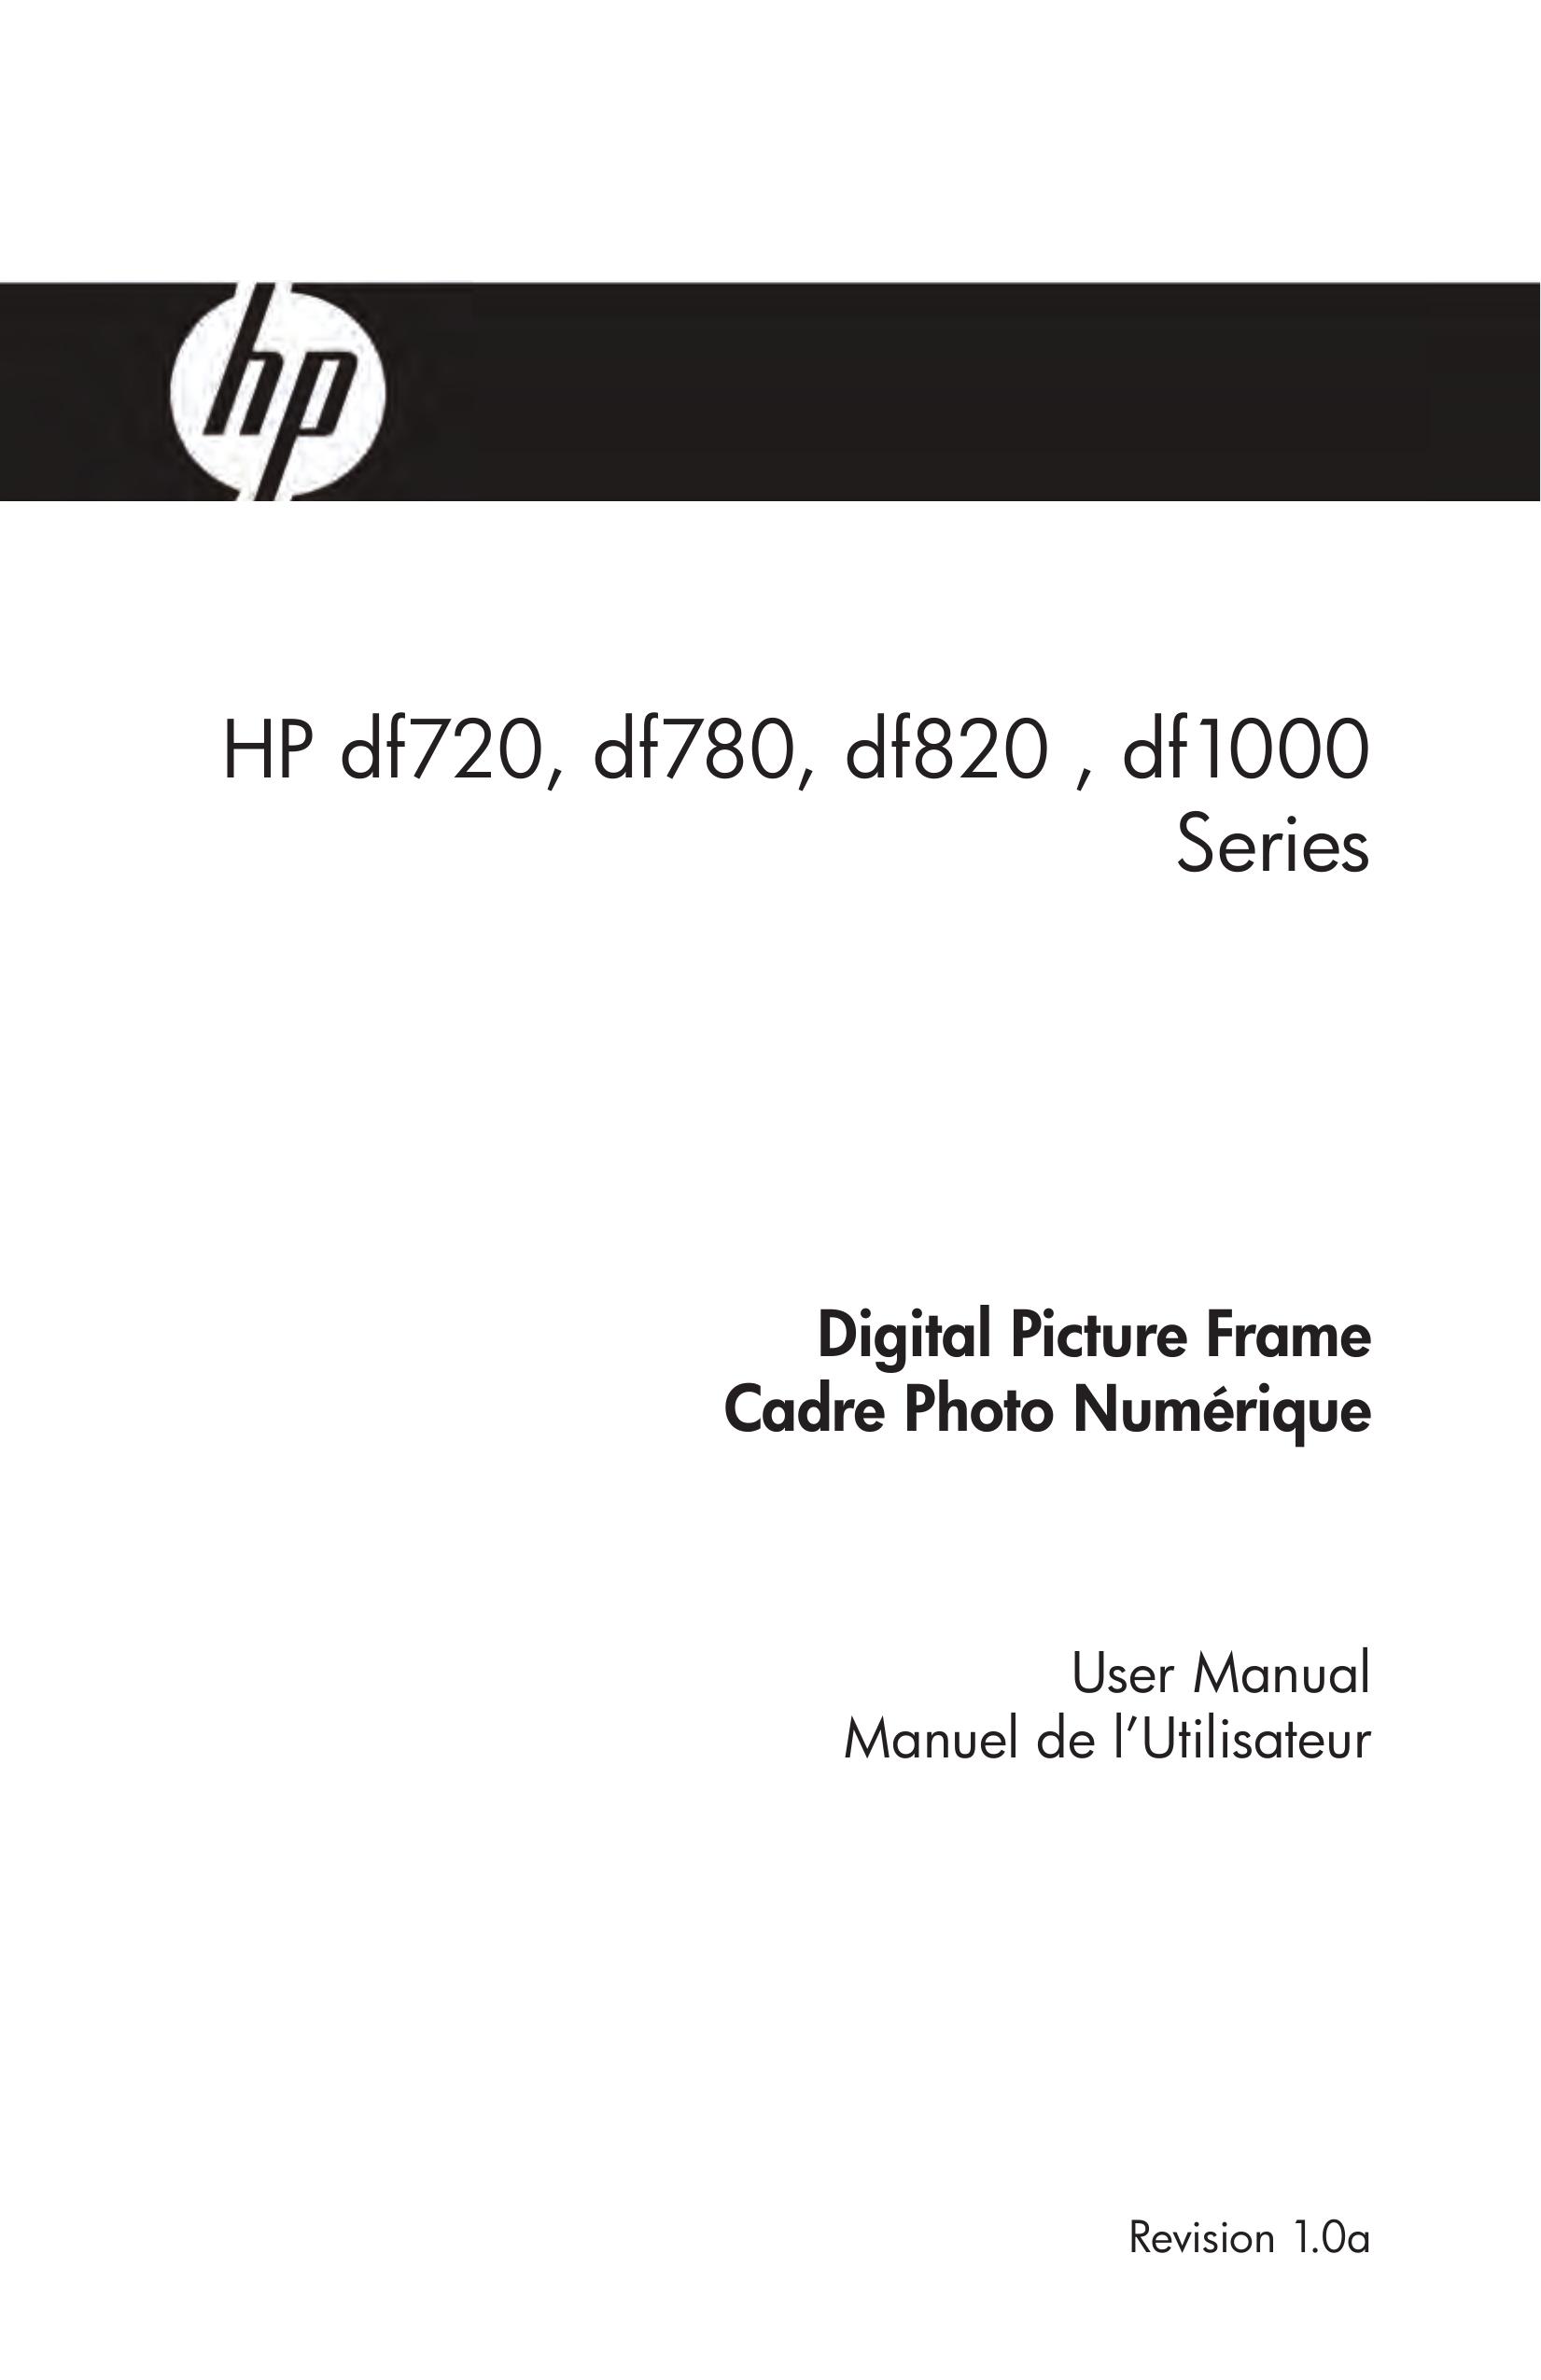 HP (Hewlett-Packard) DF720 Digital Photo Frame User Manual